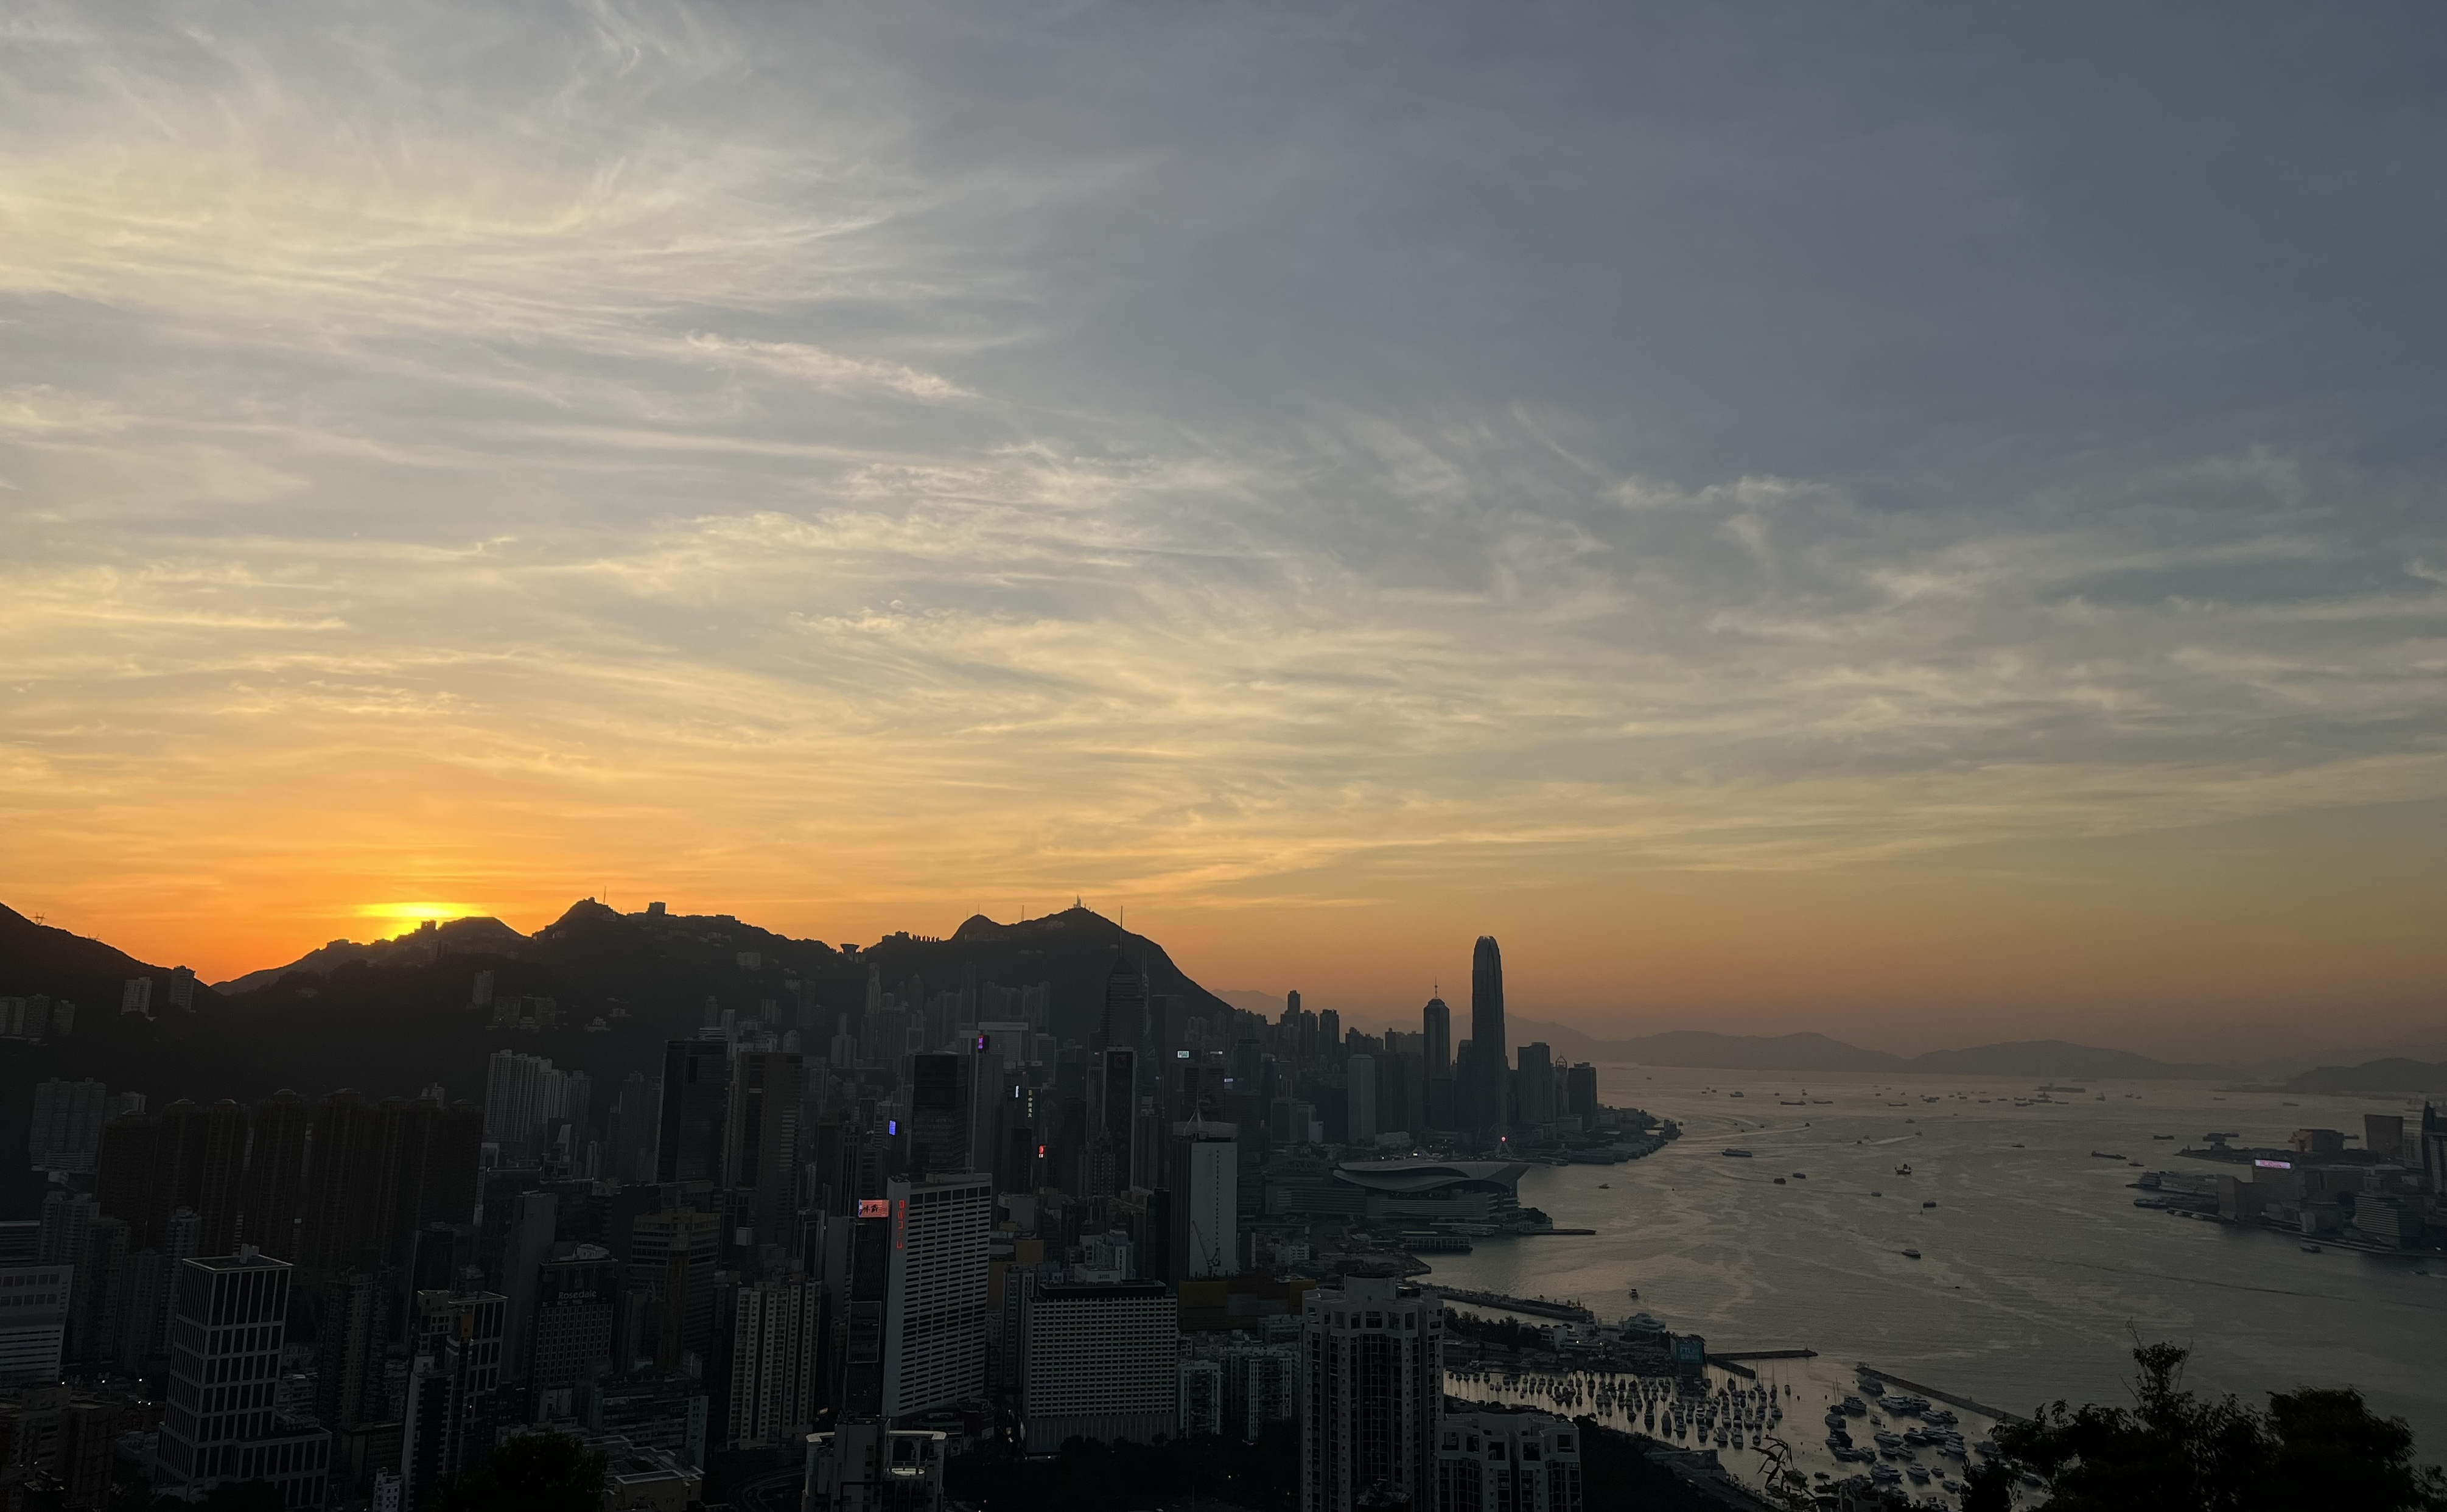 The sun sets over Hong Kong